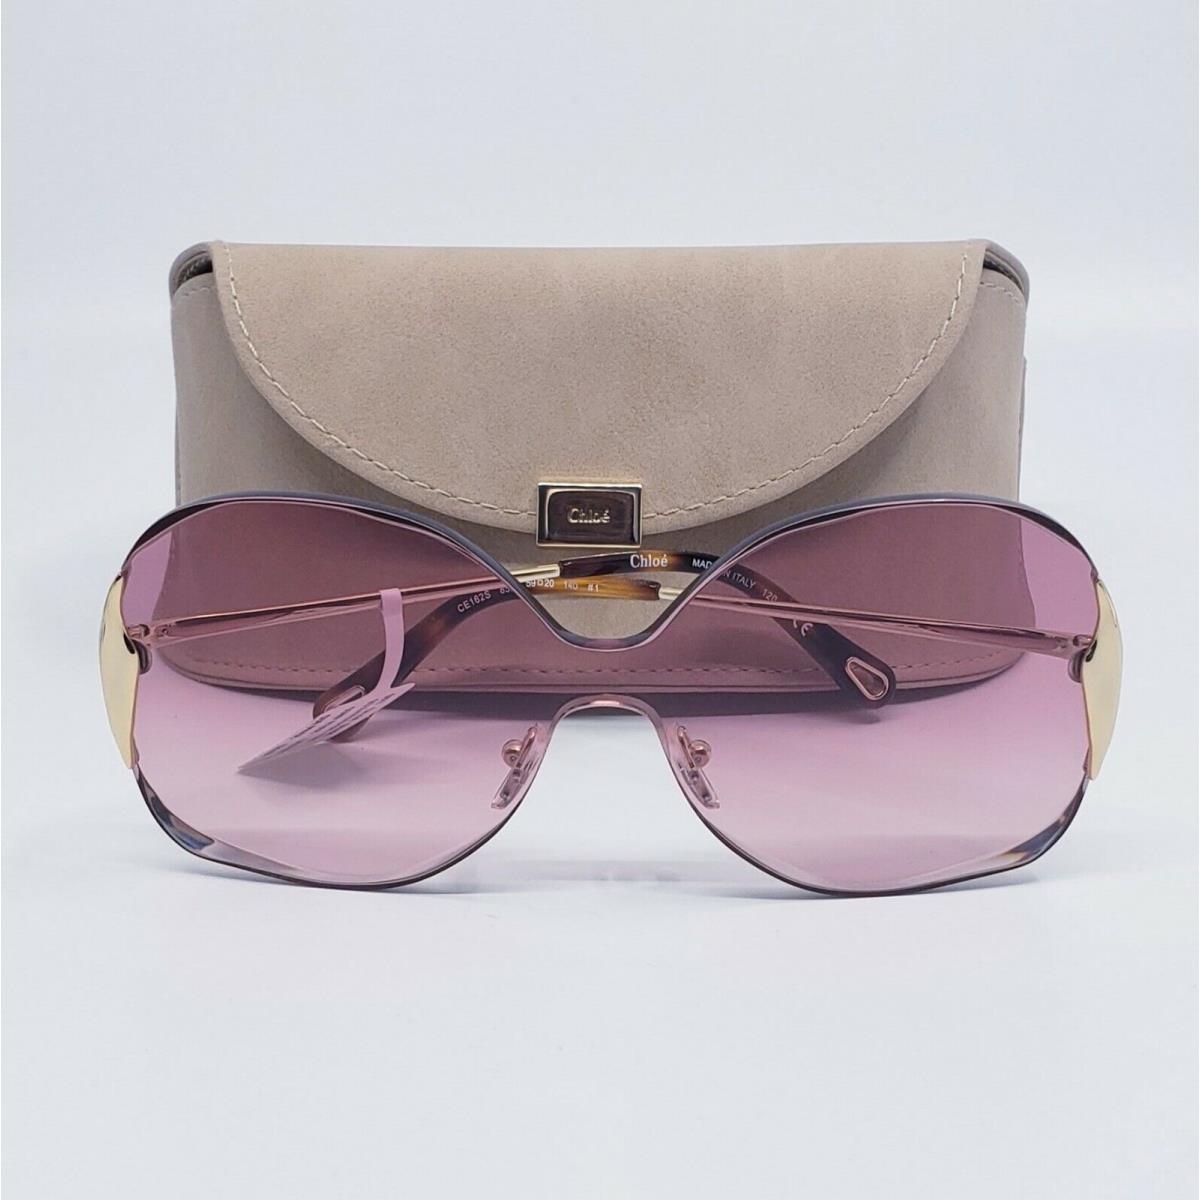 Chloé sunglasses  - Gold Frame, Pink Lens 3